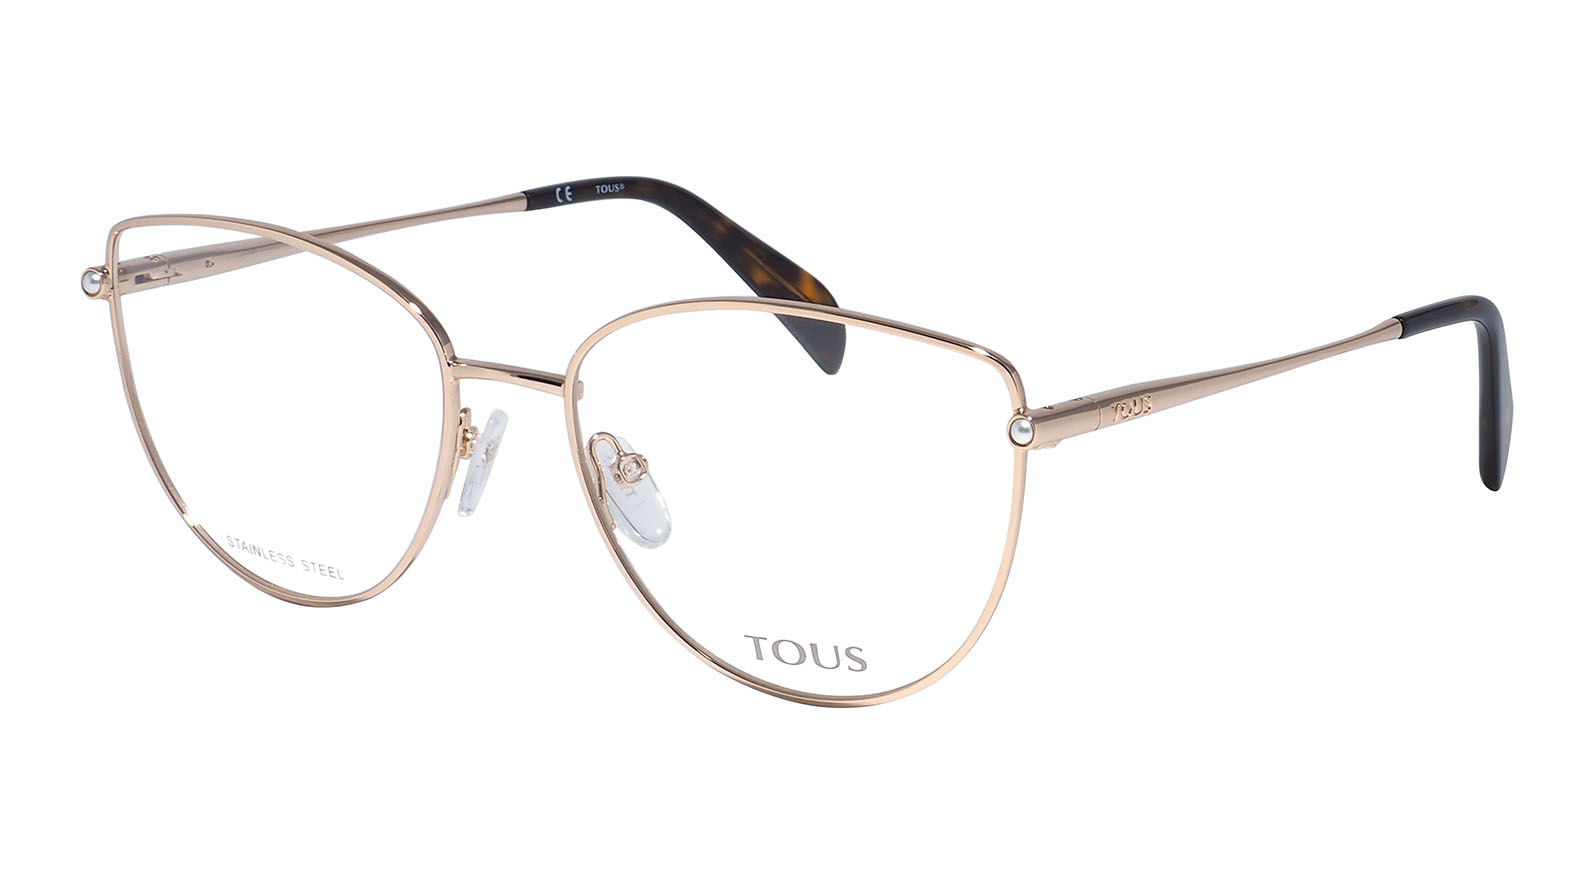 Tous 428S 300 очки salivio корригирующие женские с диоптриями 4 0